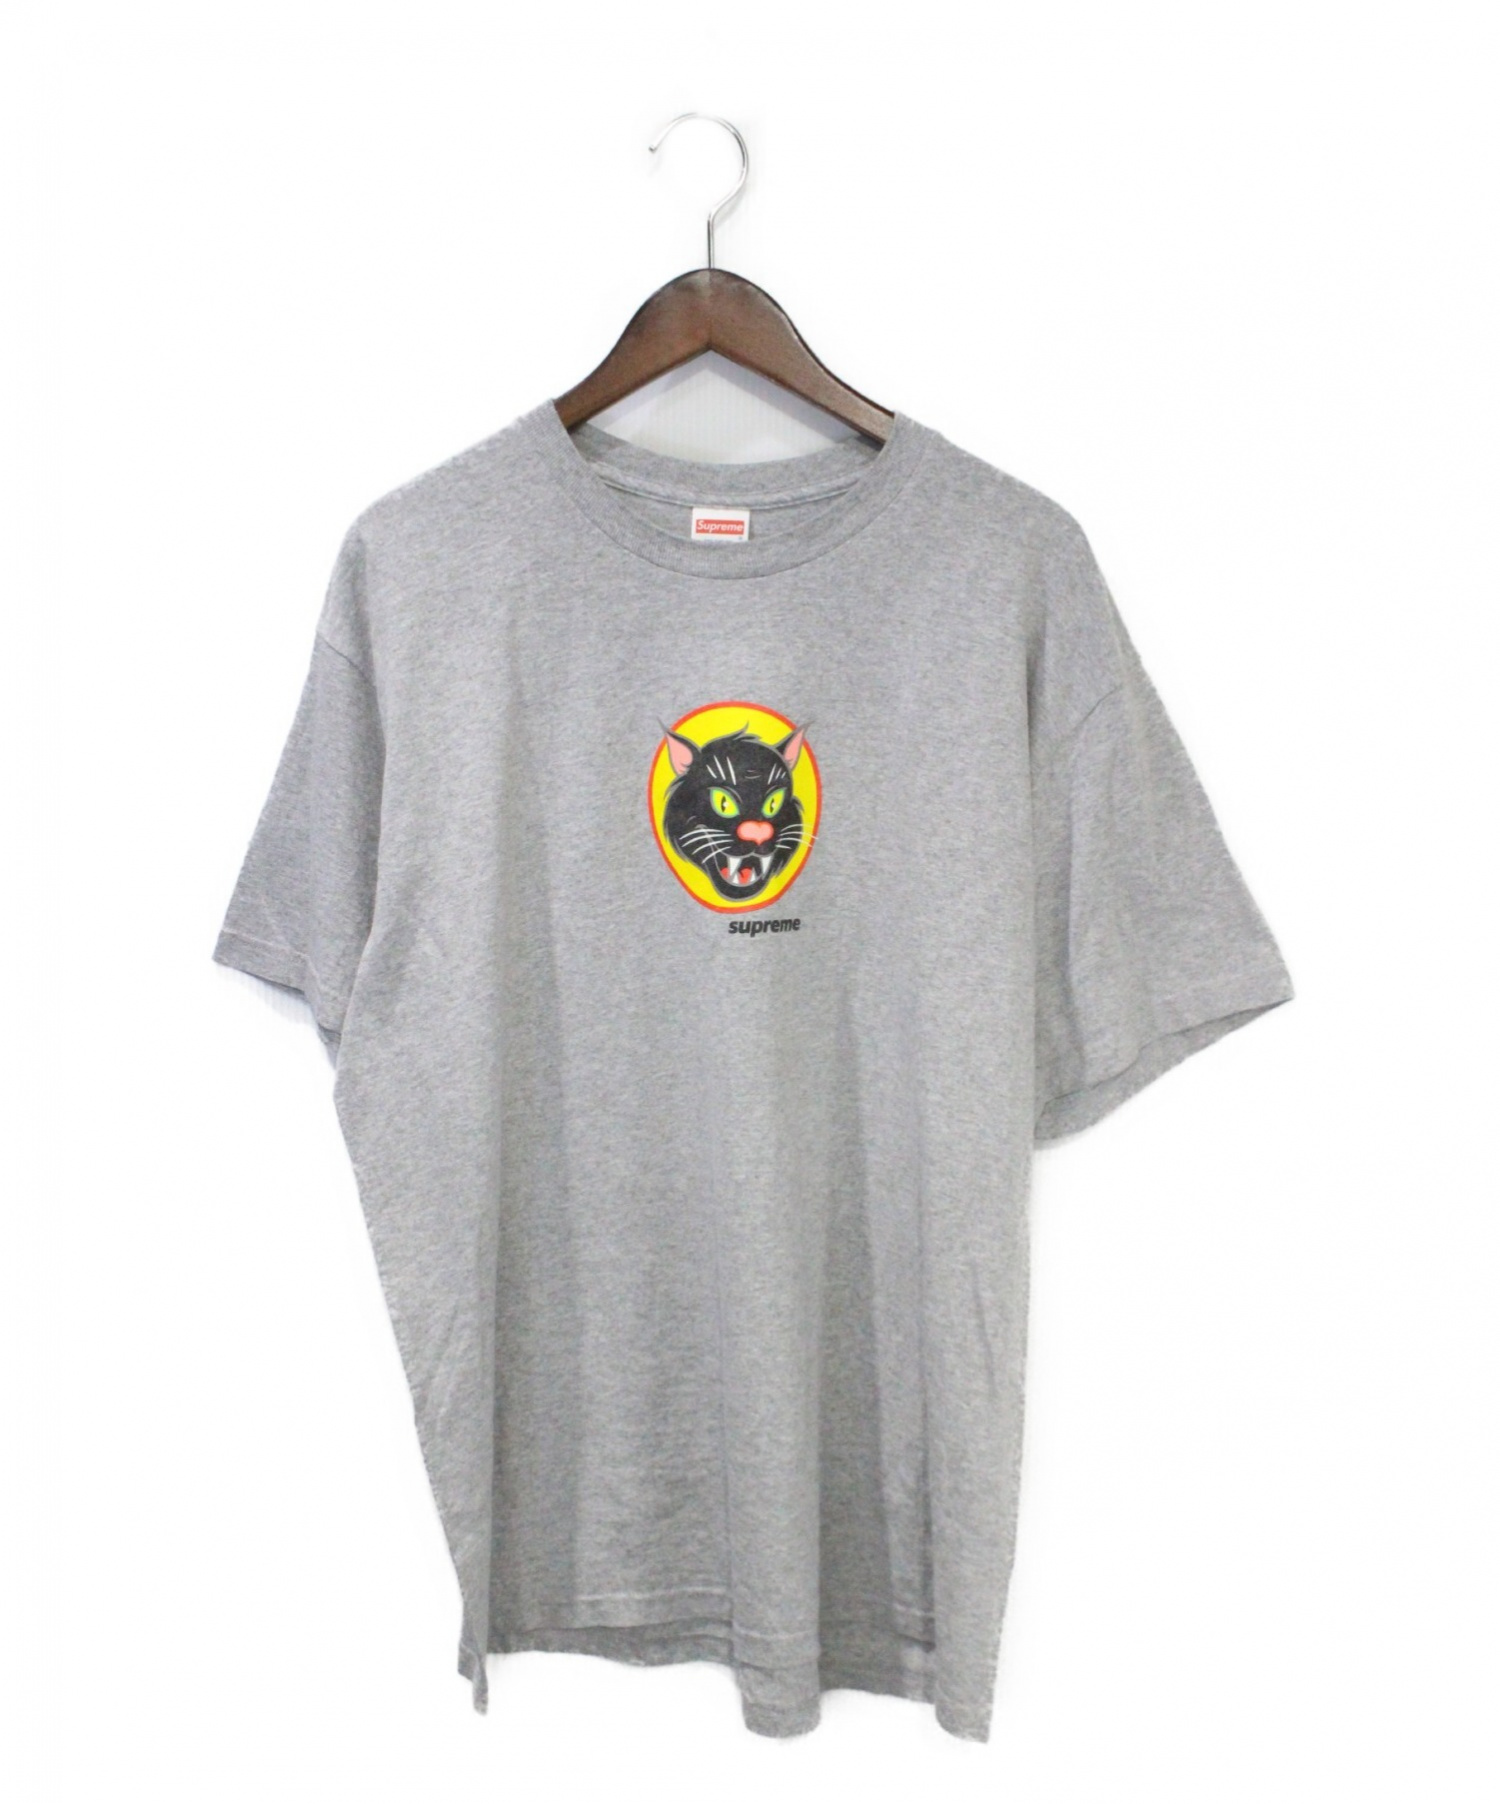 Supreme シュプリーム Tシャツ グレー サイズ ｌ ブランド古着の通販サイト ブランドコレクト